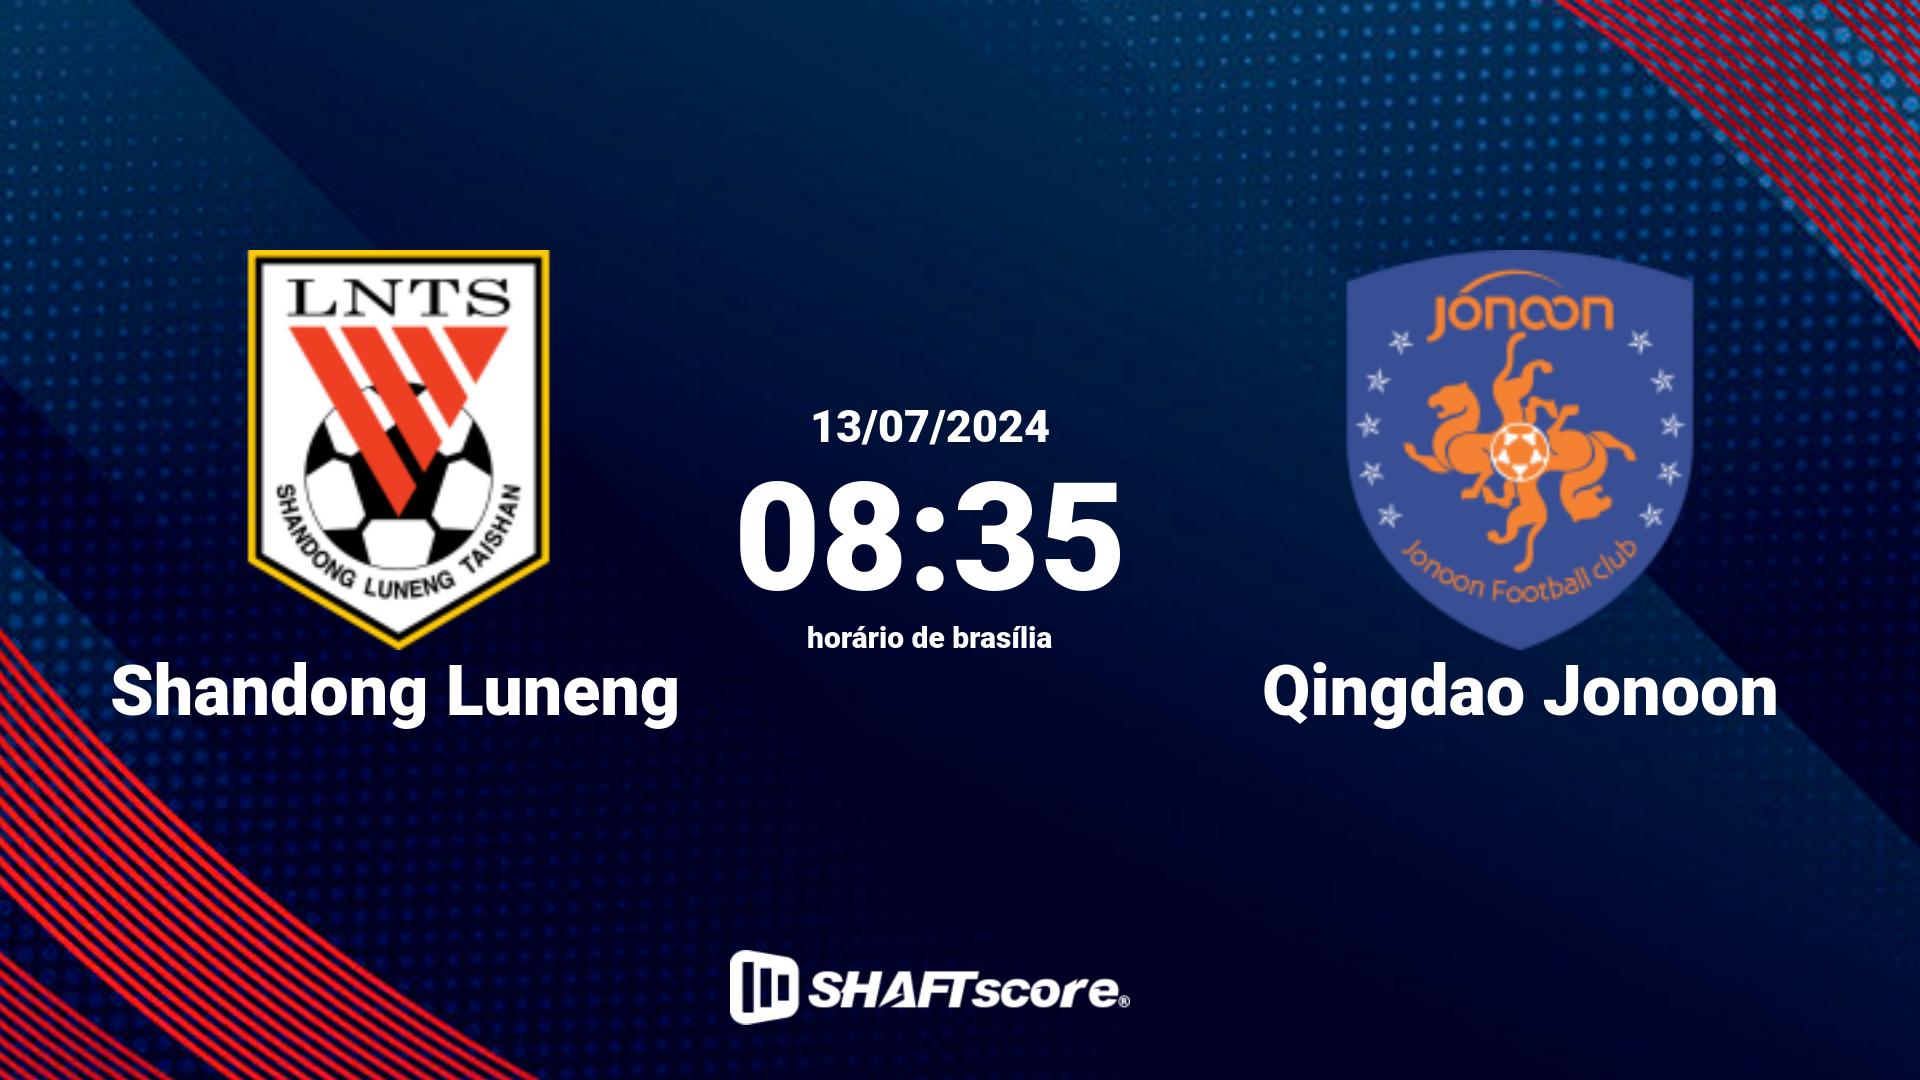 Estatísticas do jogo Shandong Luneng vs Qingdao Jonoon 13.07 08:35